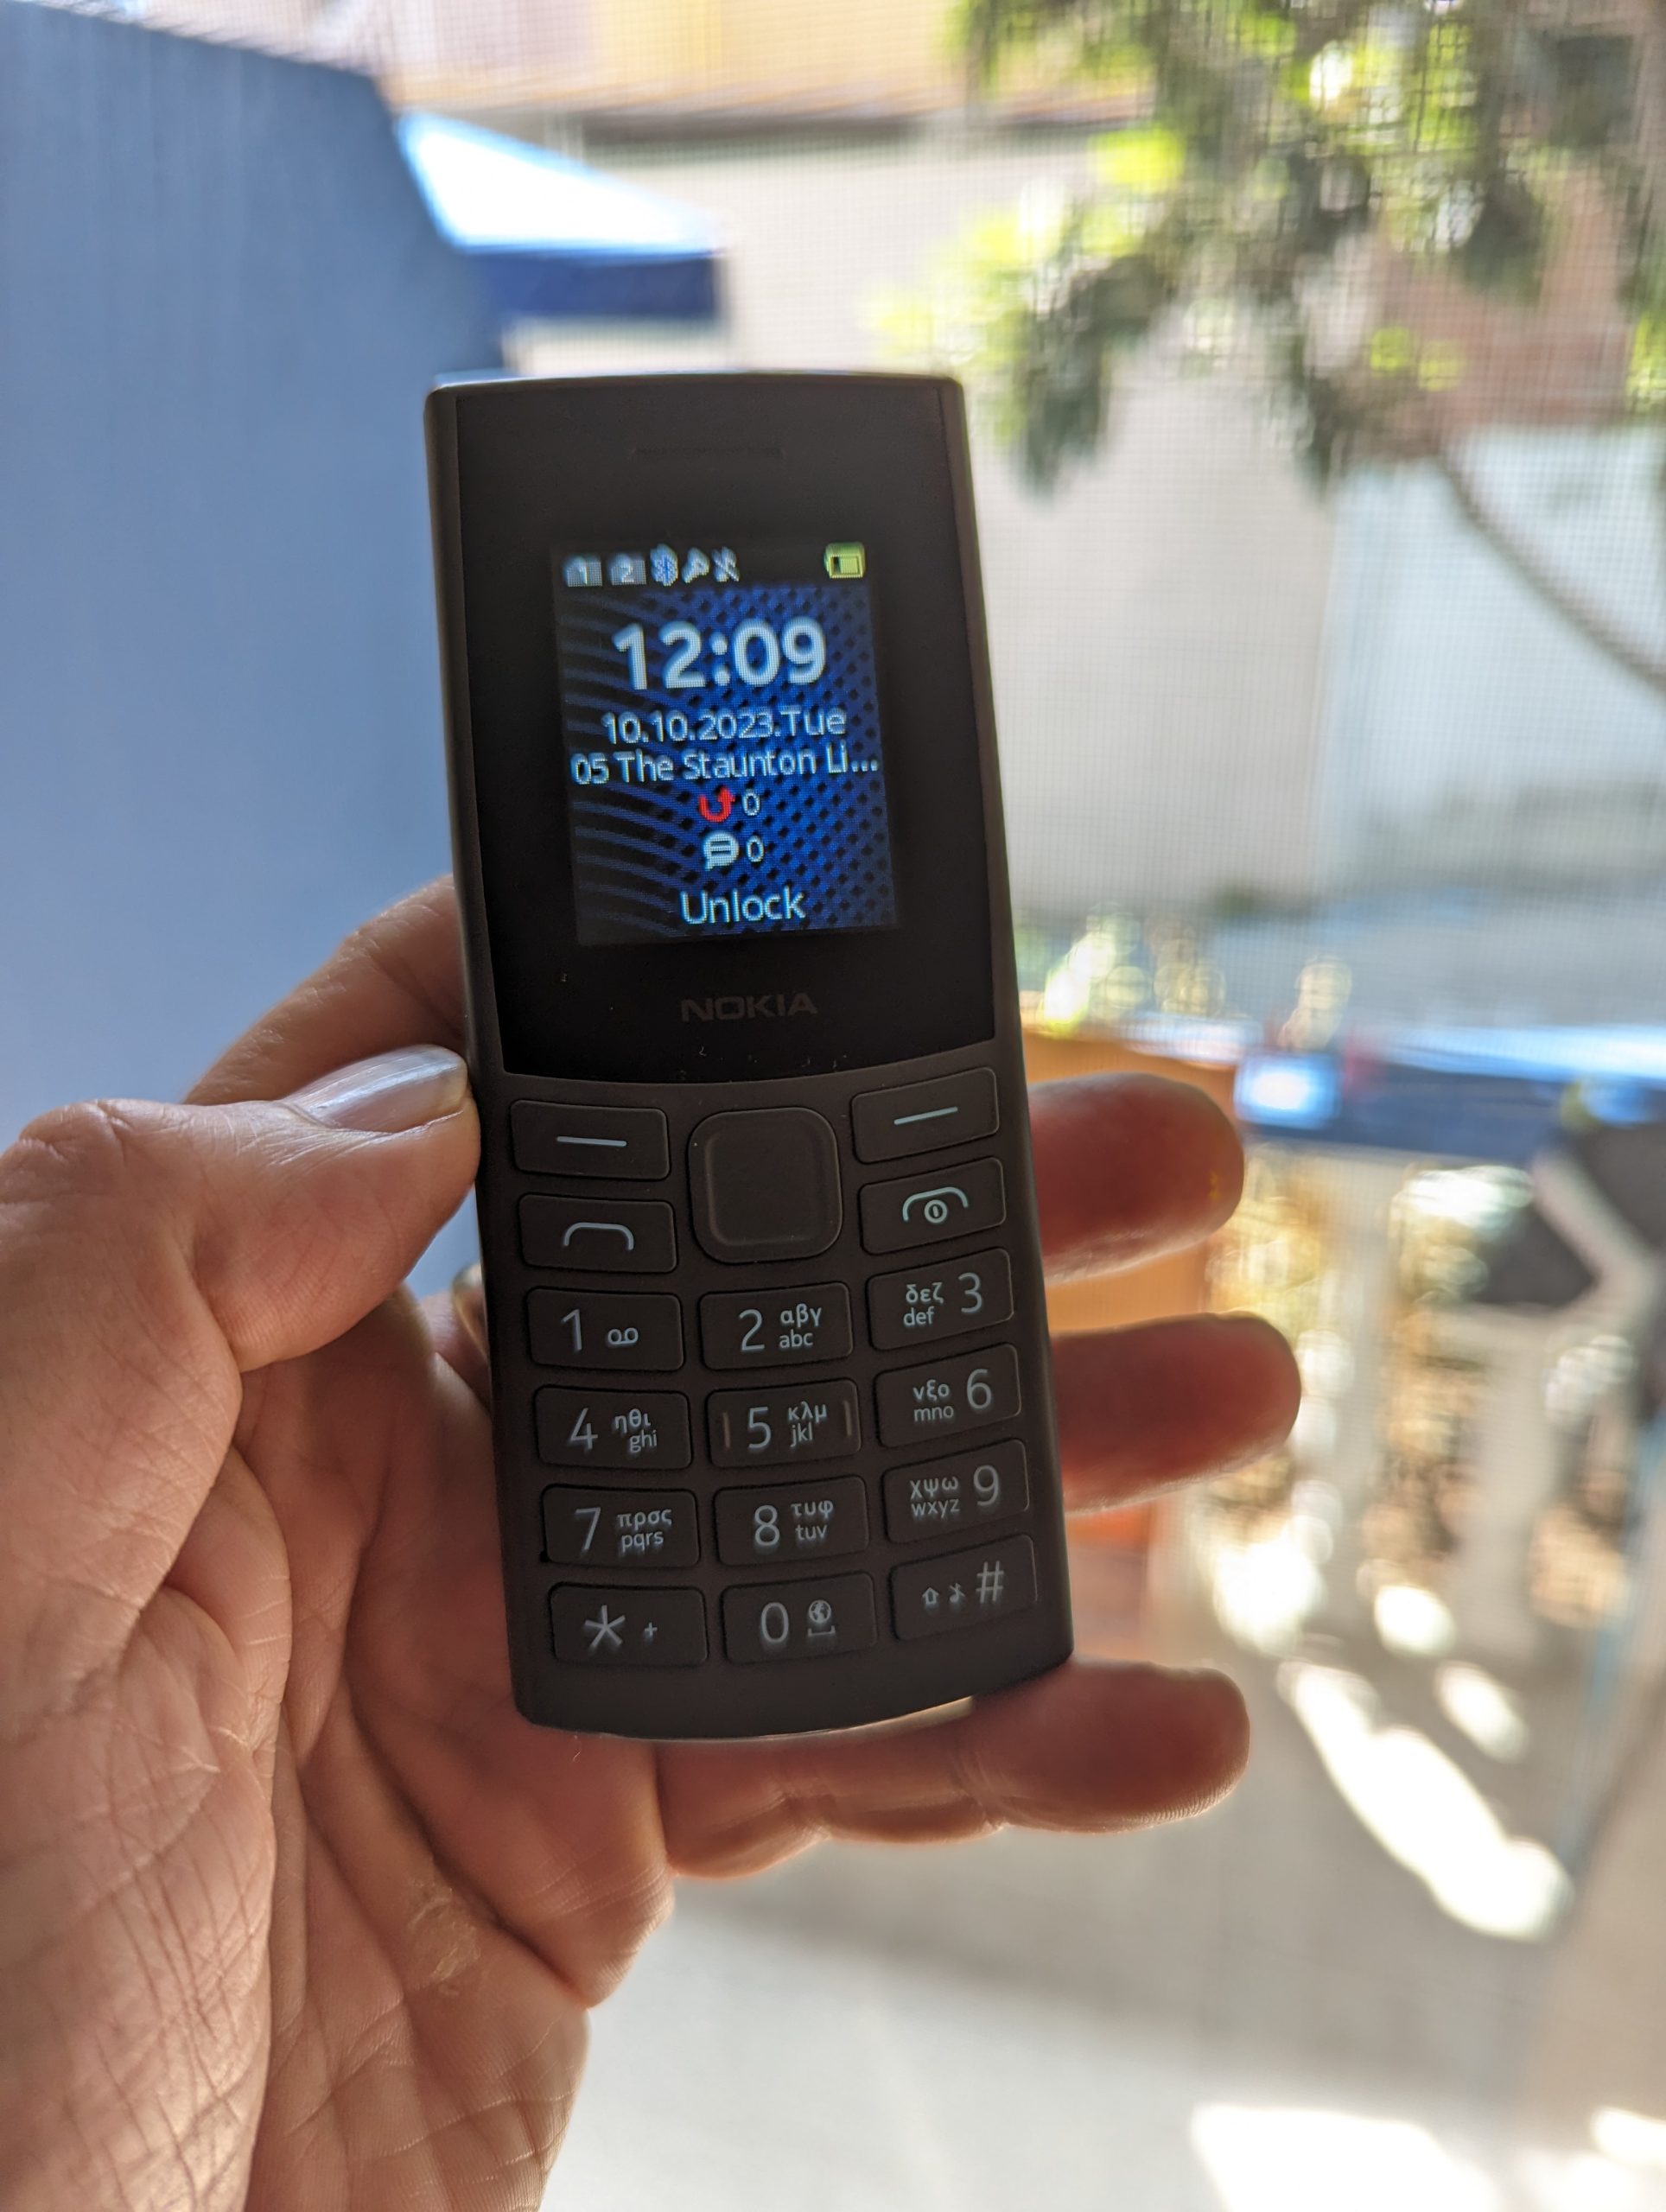 Meet the all new Nokia 105